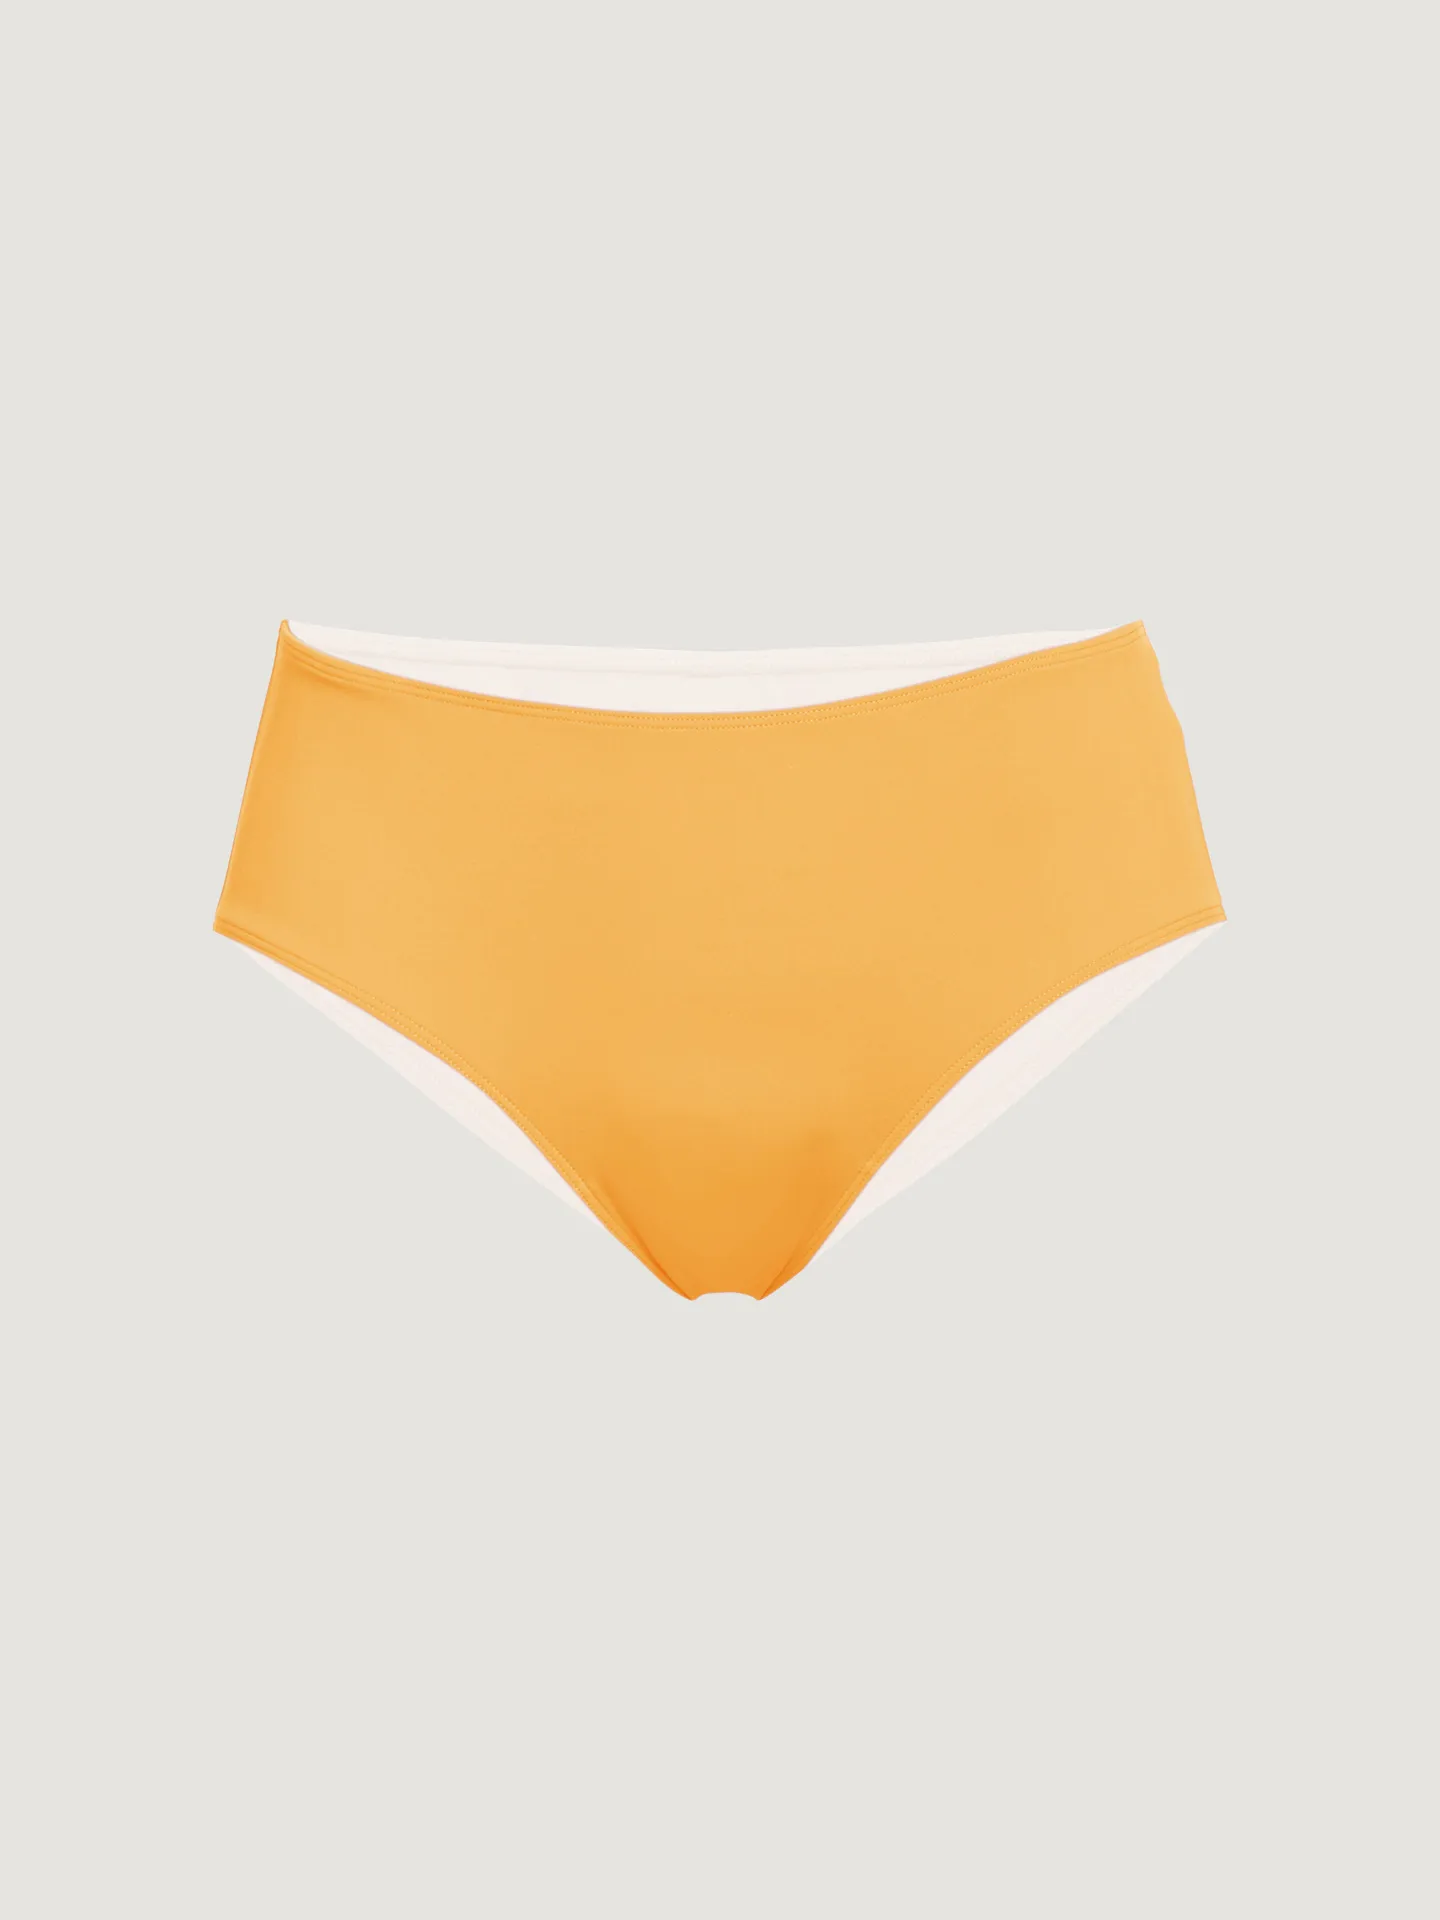 Wolford - Reversible Beach Shorts, Donna, mango/salt, Taglia: L